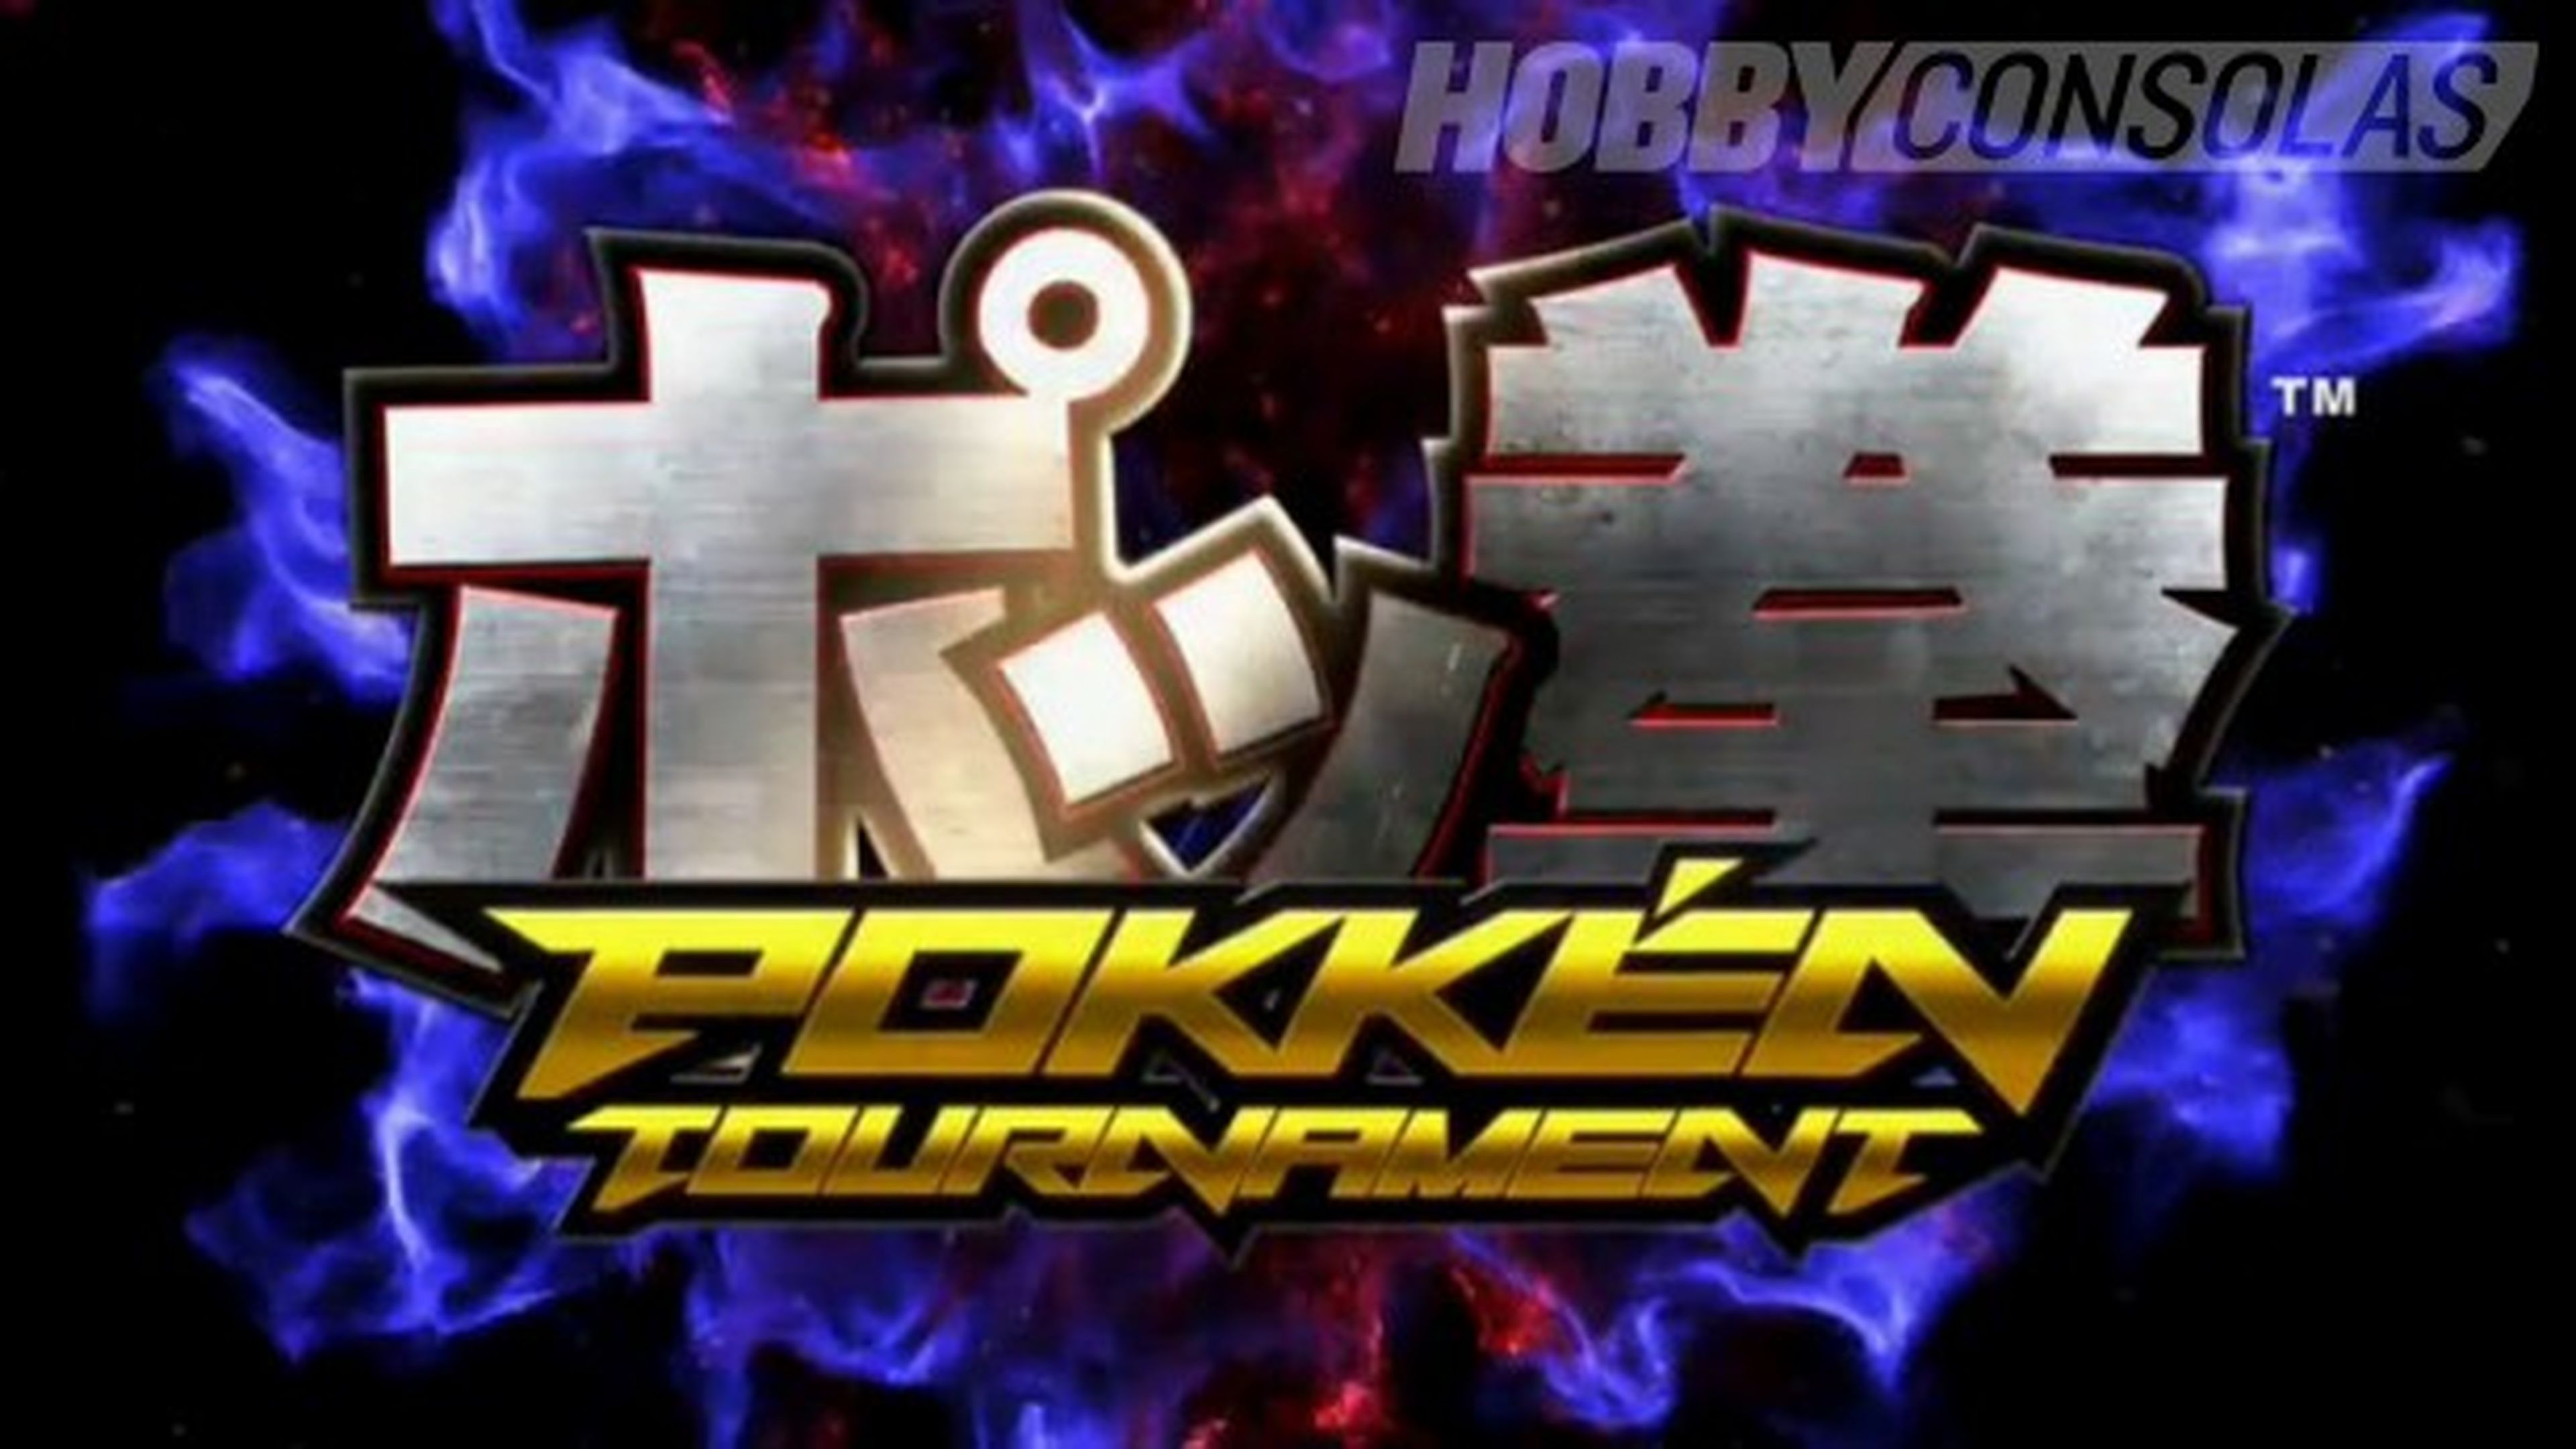 Pokkén Tournament saldrá "primero en recreativas"